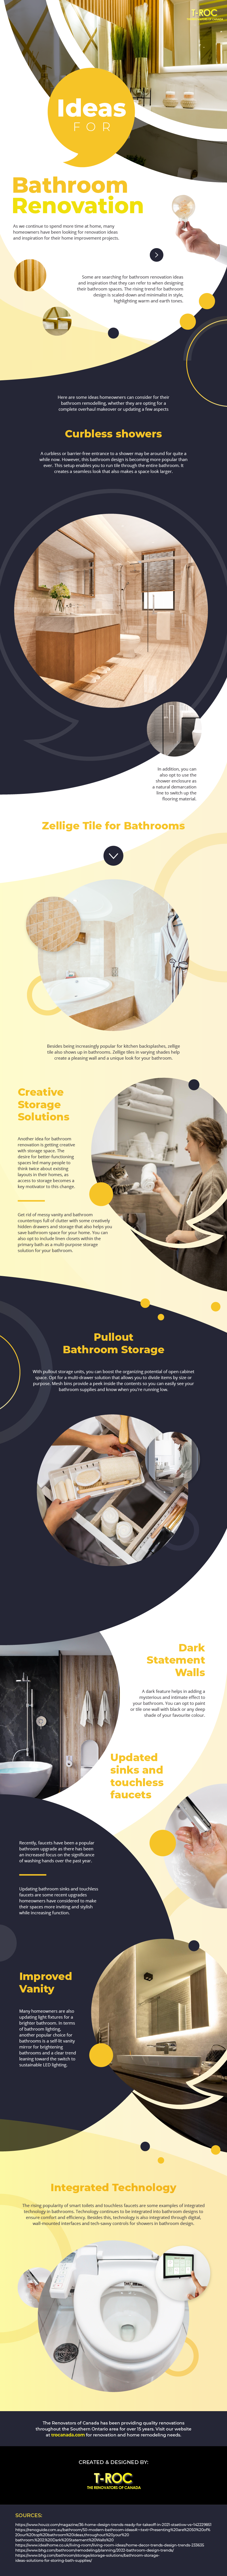 Ideas for Bathroom Renovation[Infographic]